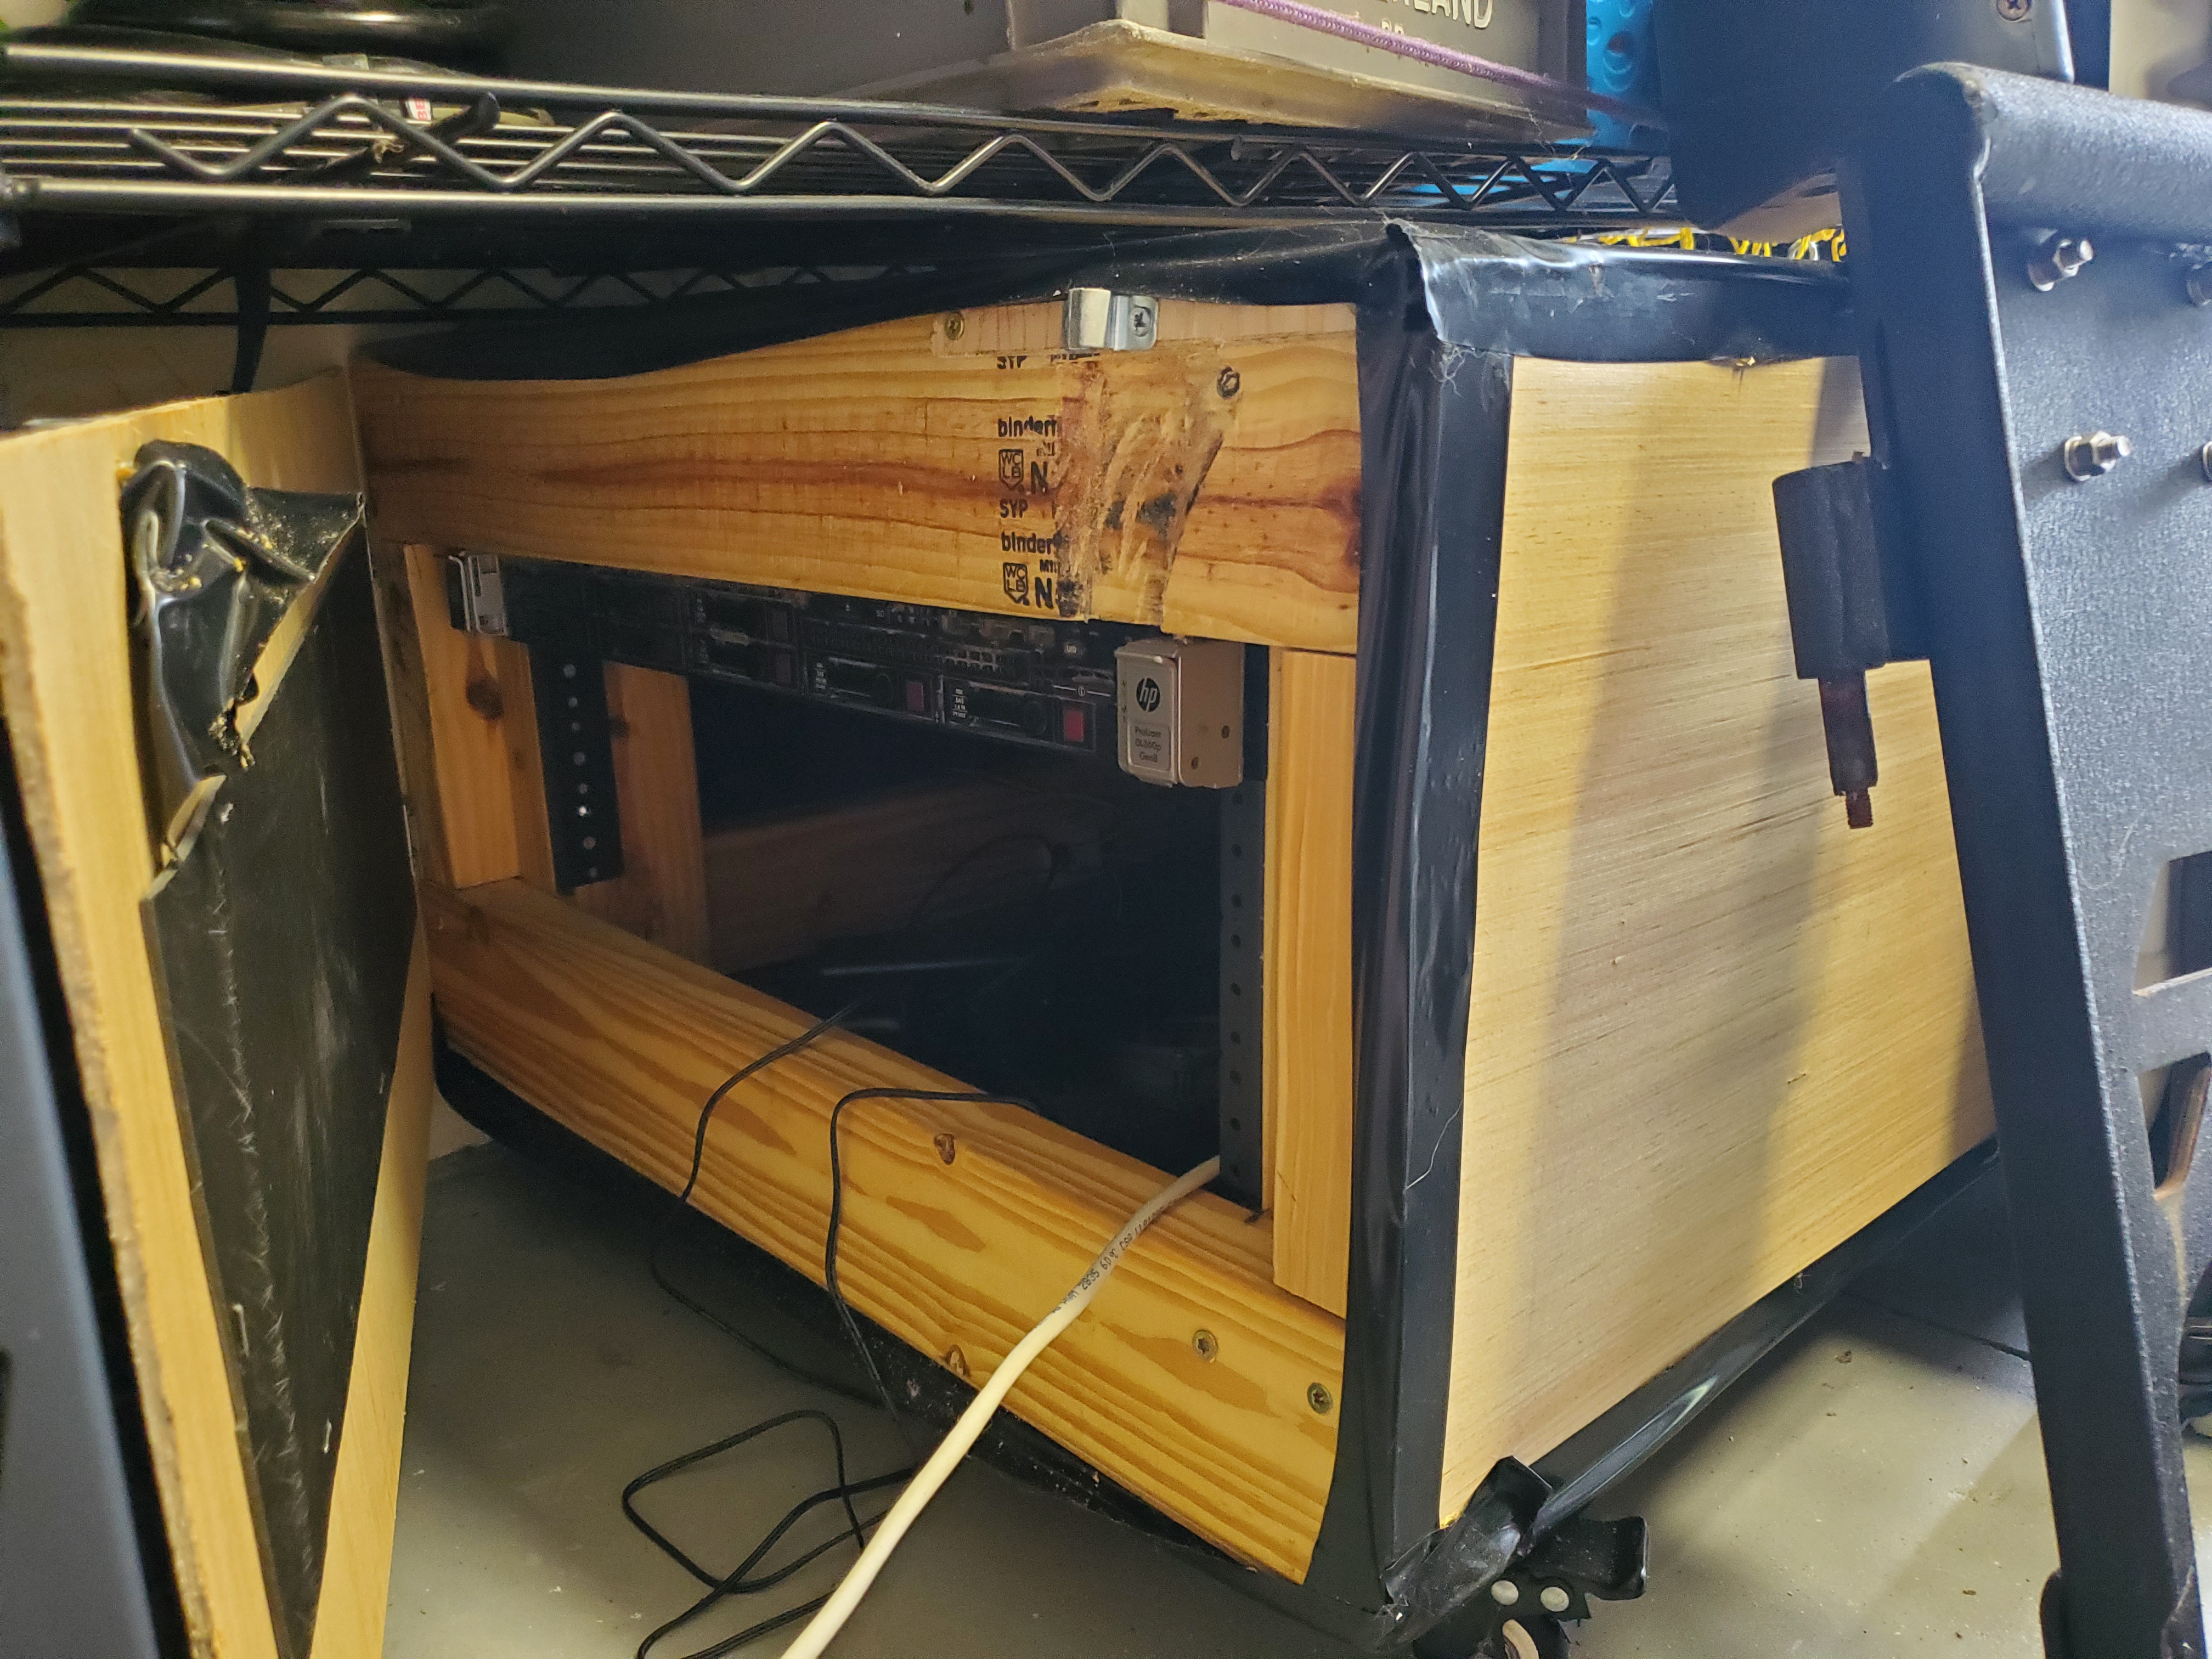 A wooden server case